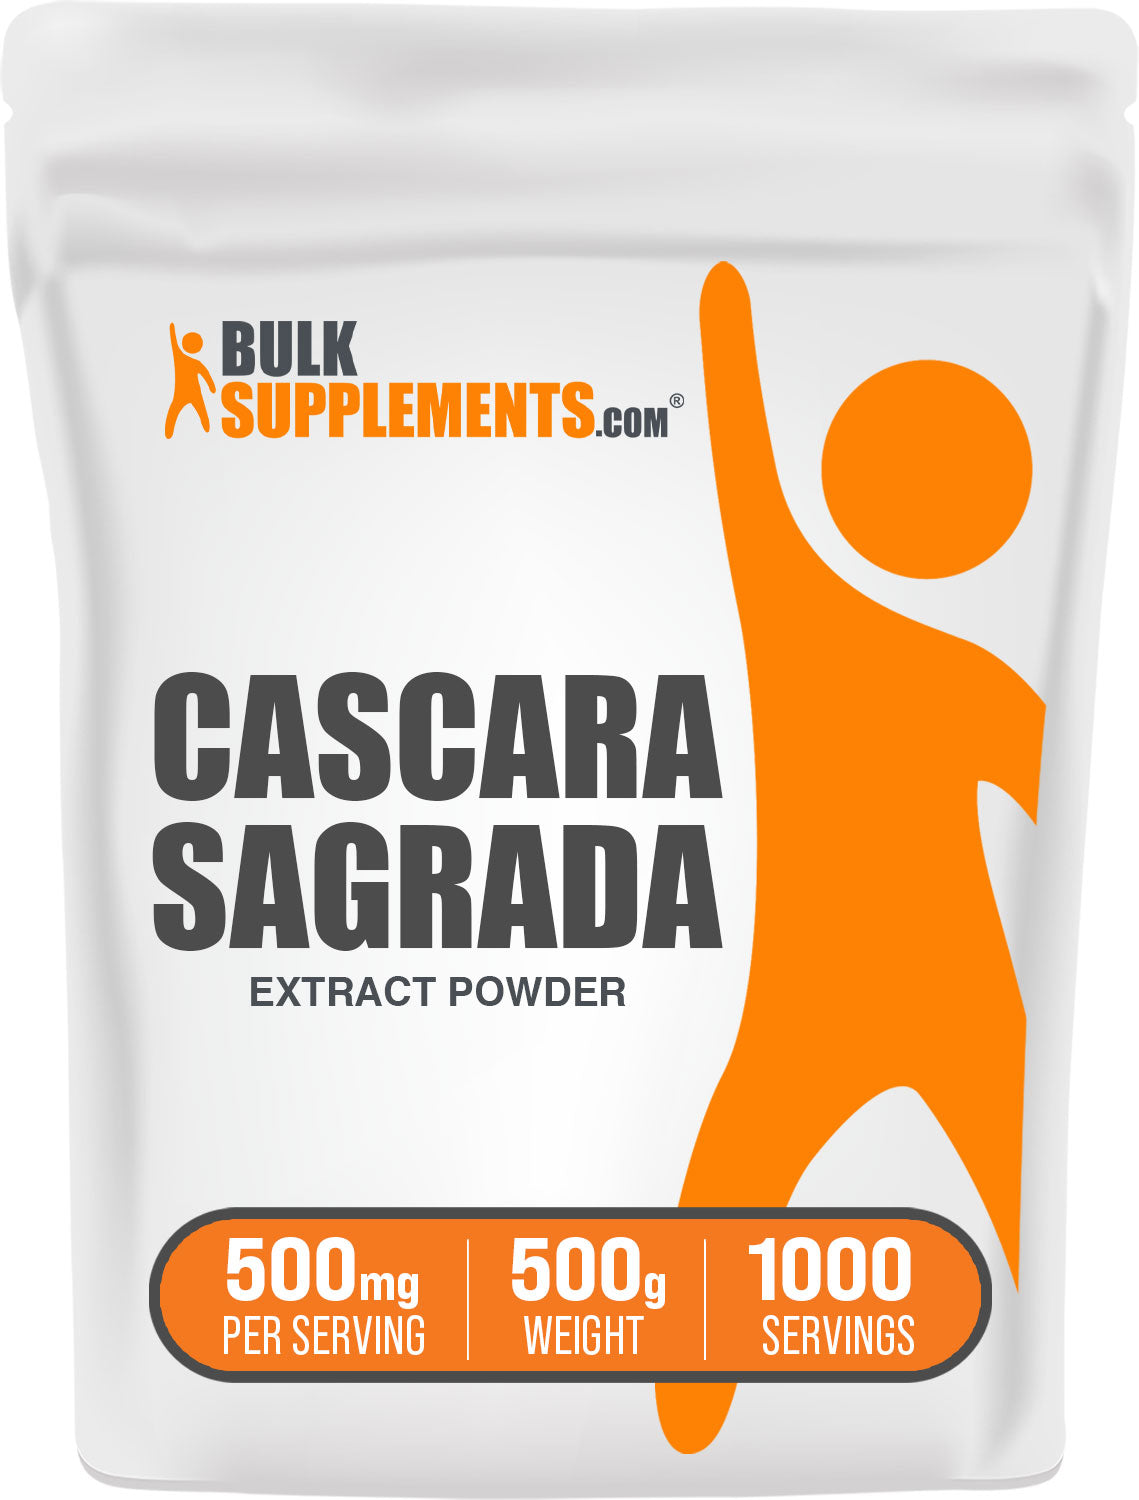 500g of cascara sagrada